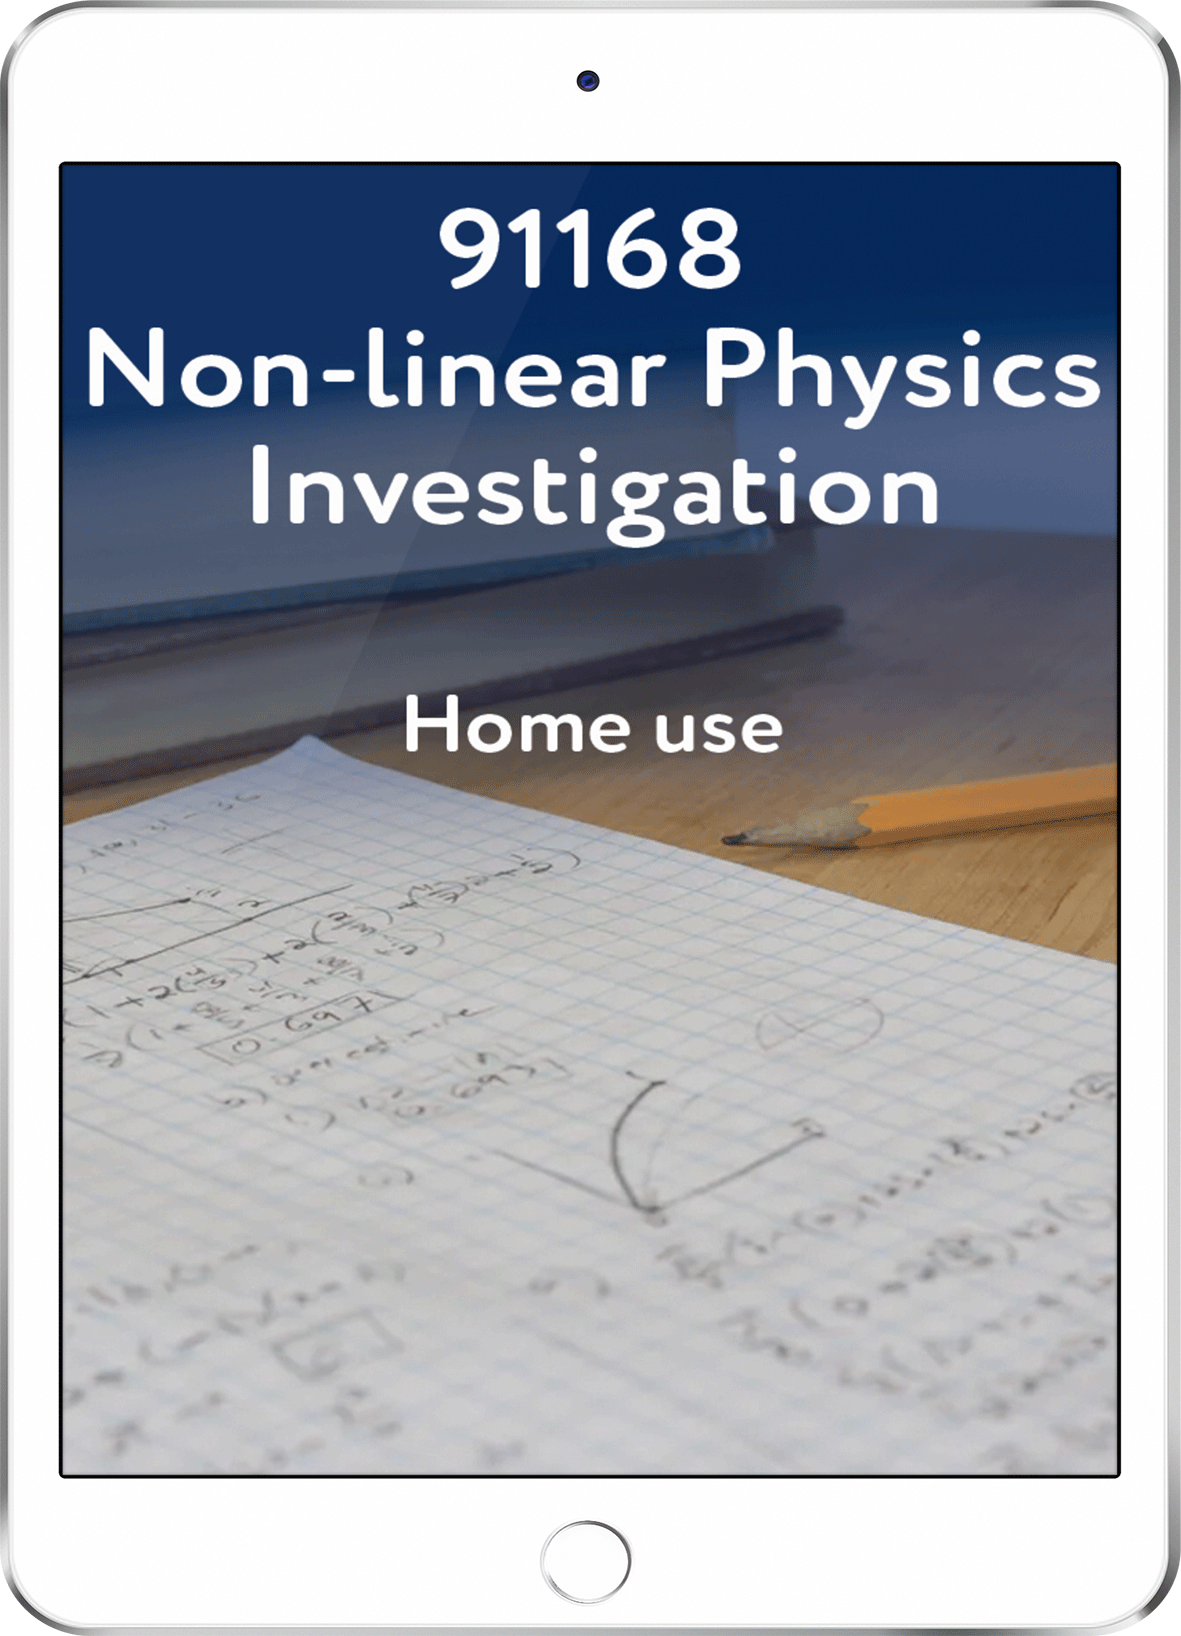 91168 Non-linear Physics Investigation - Home Use